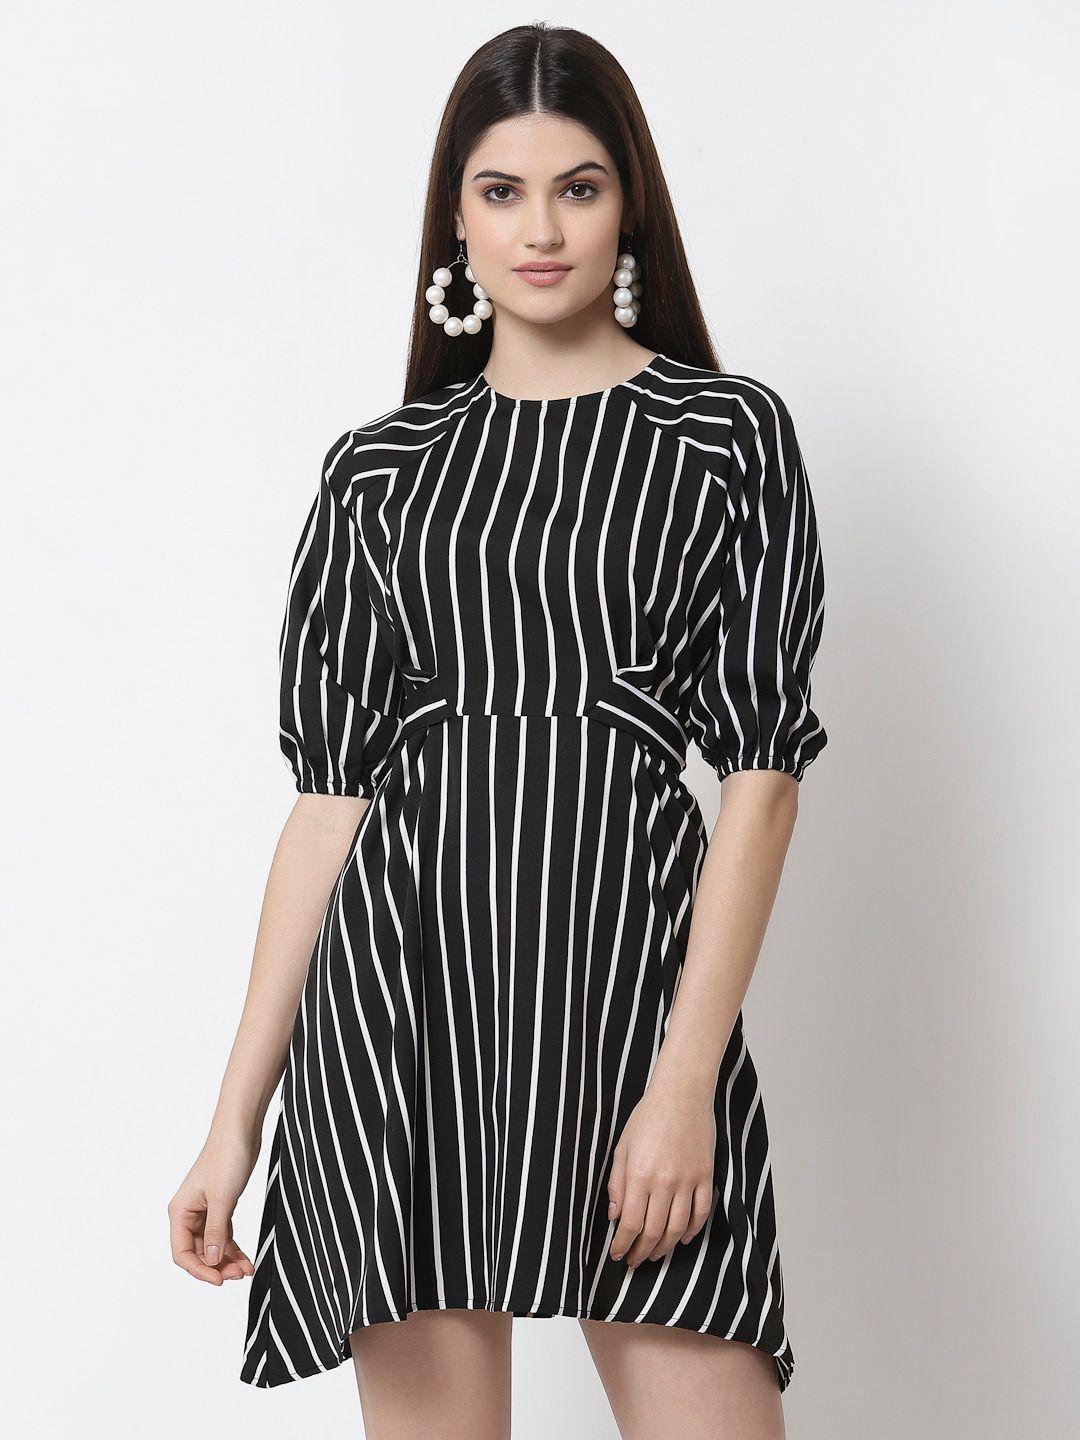 style-quotient-black-&-white-striped-crepe-dress